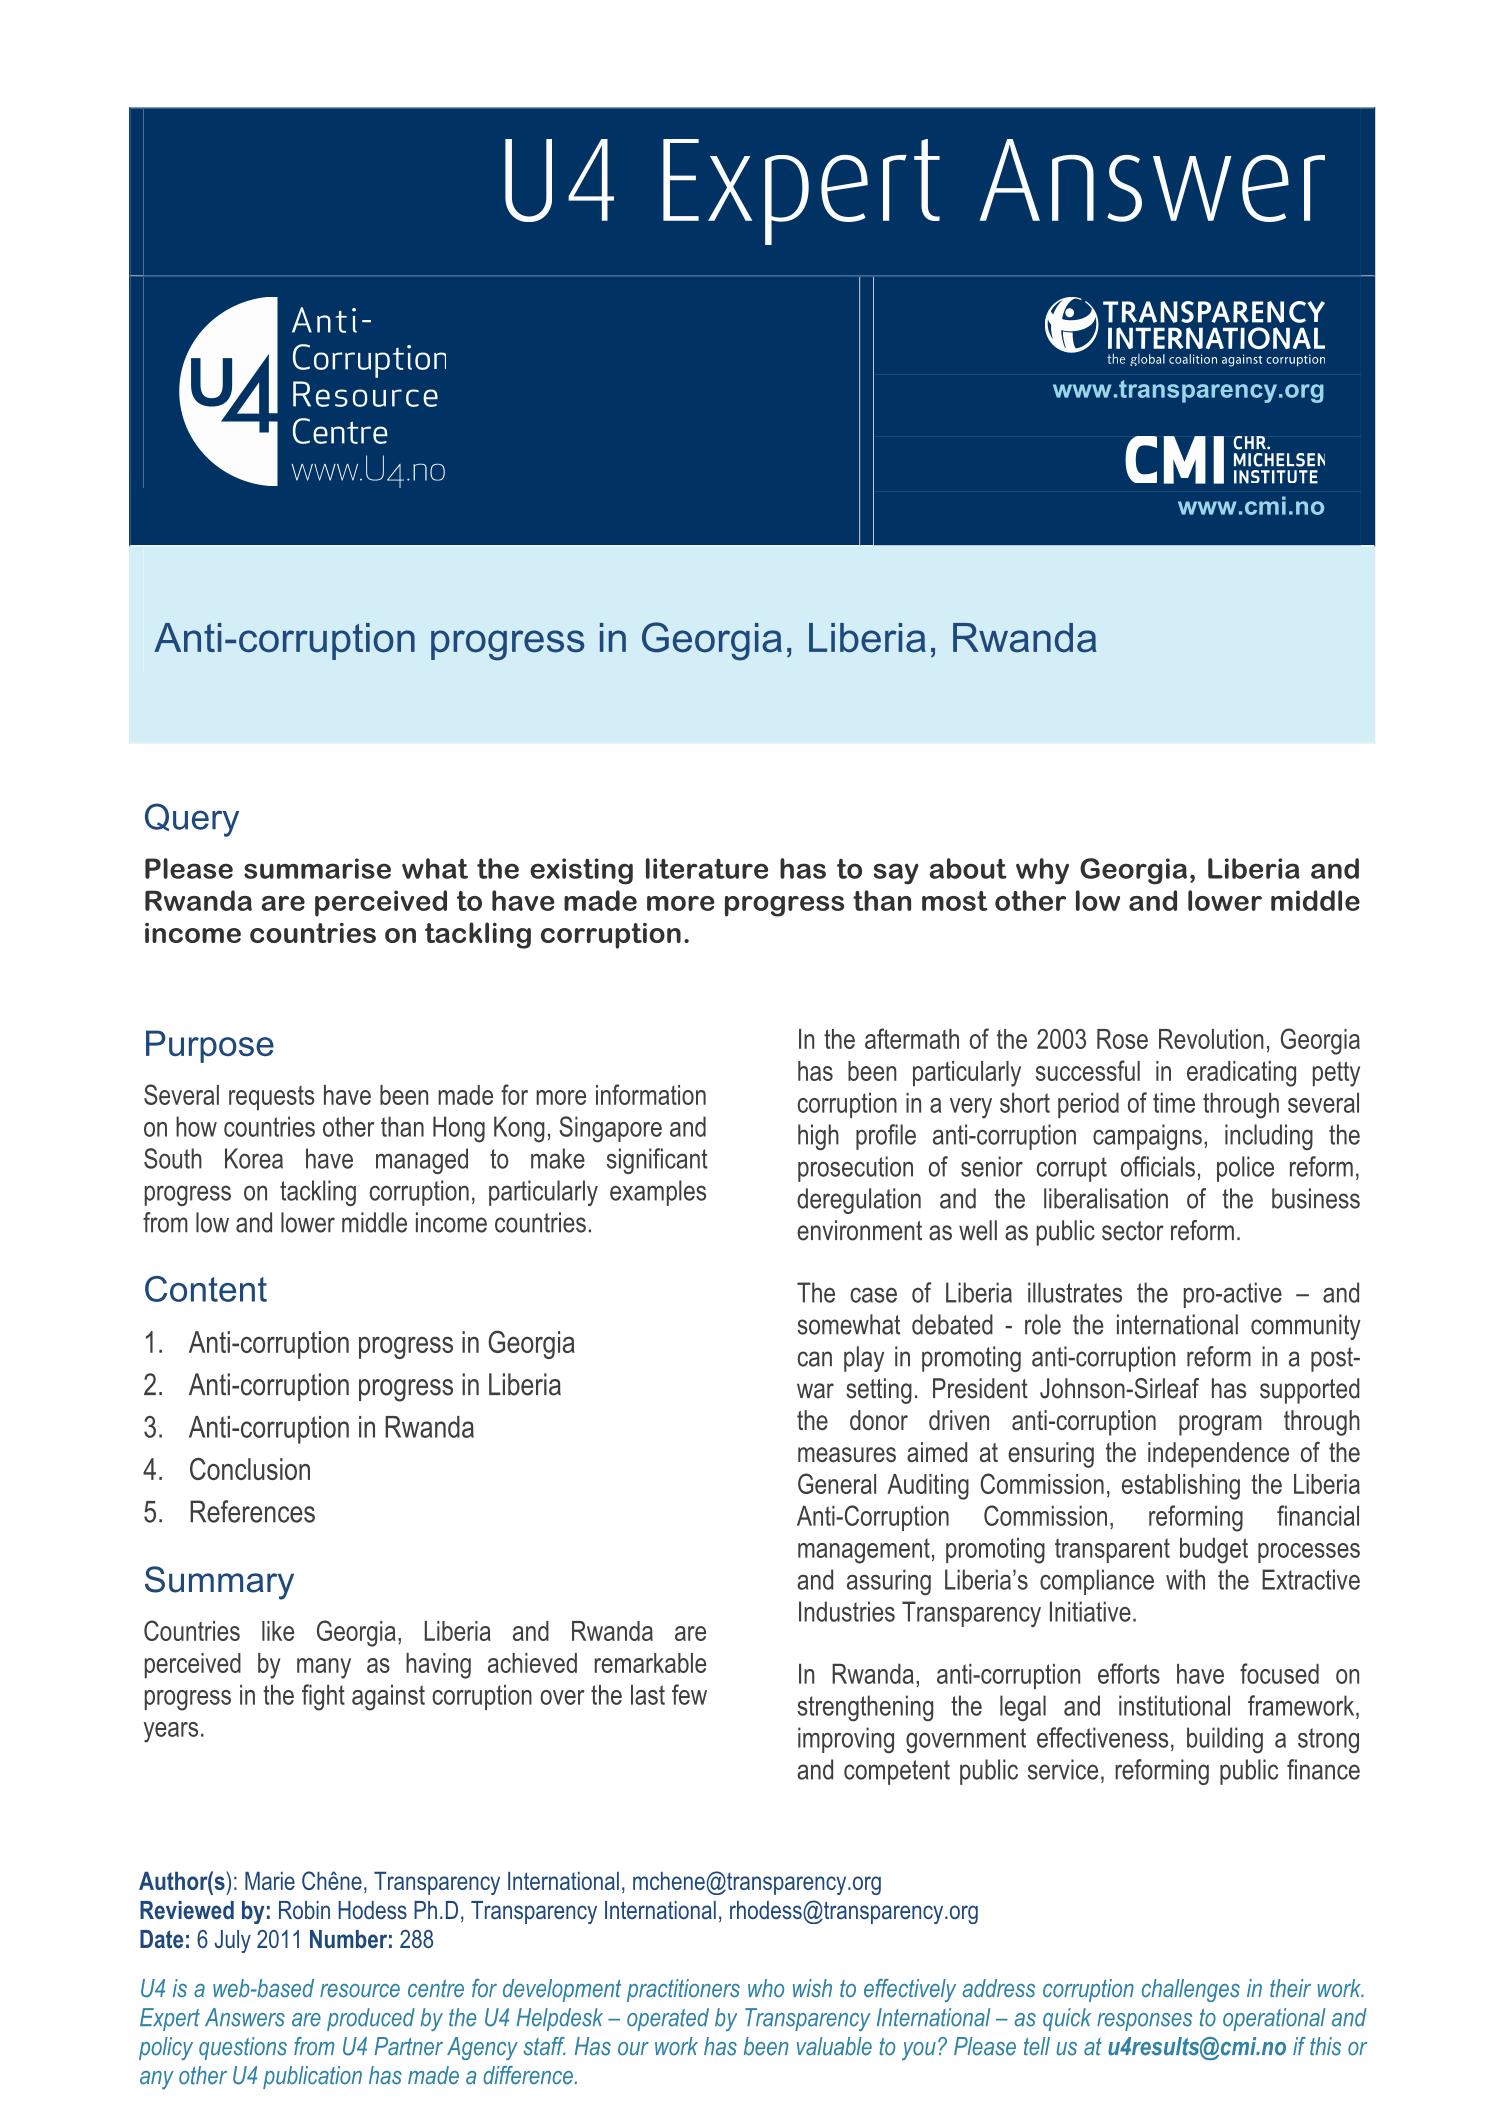 Anti-corruption progress in Georgia, Liberia and Rwanda 